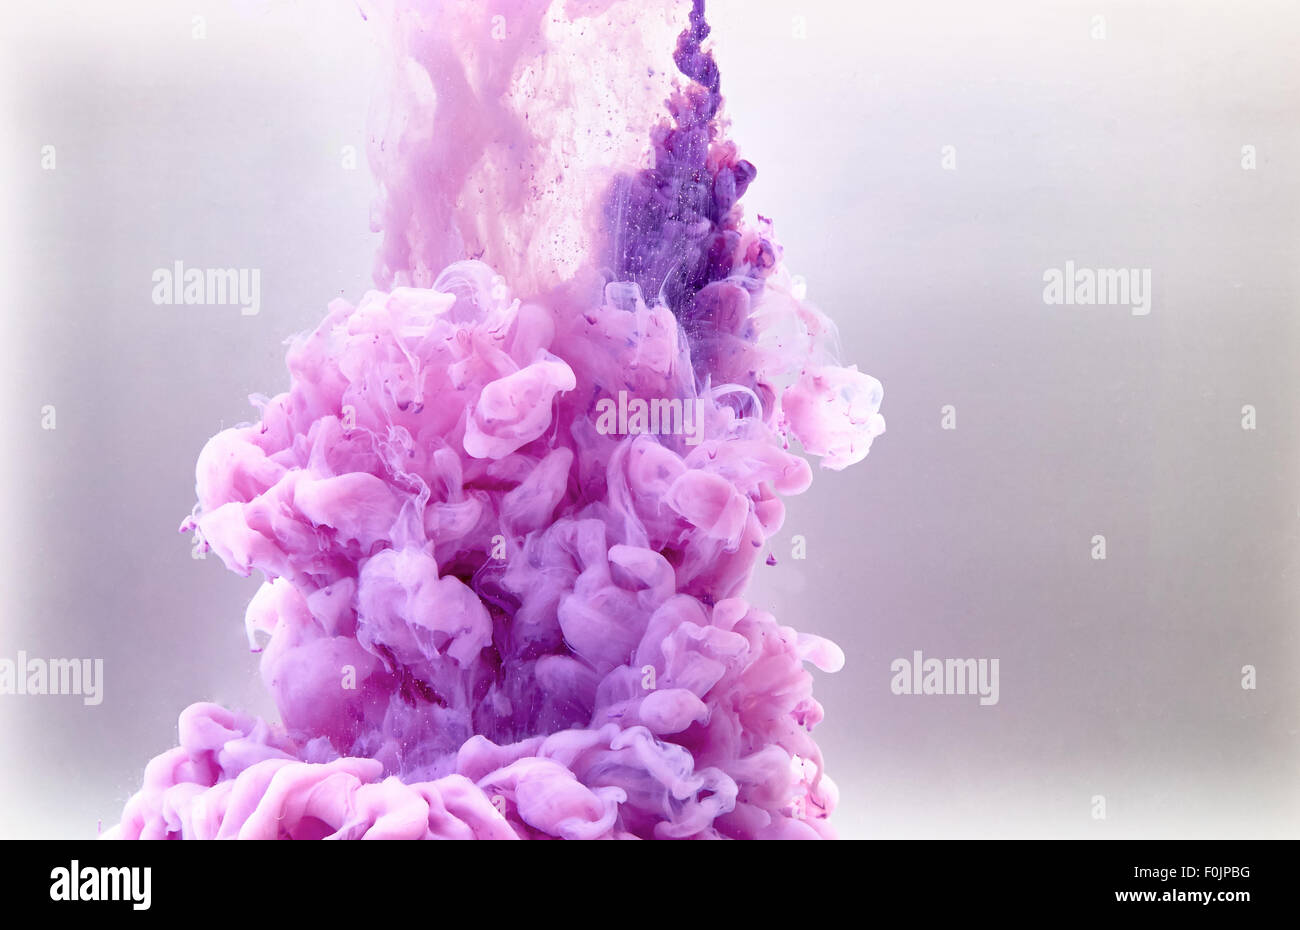 Violet pastel ink smoke cloud in water Stock Photo